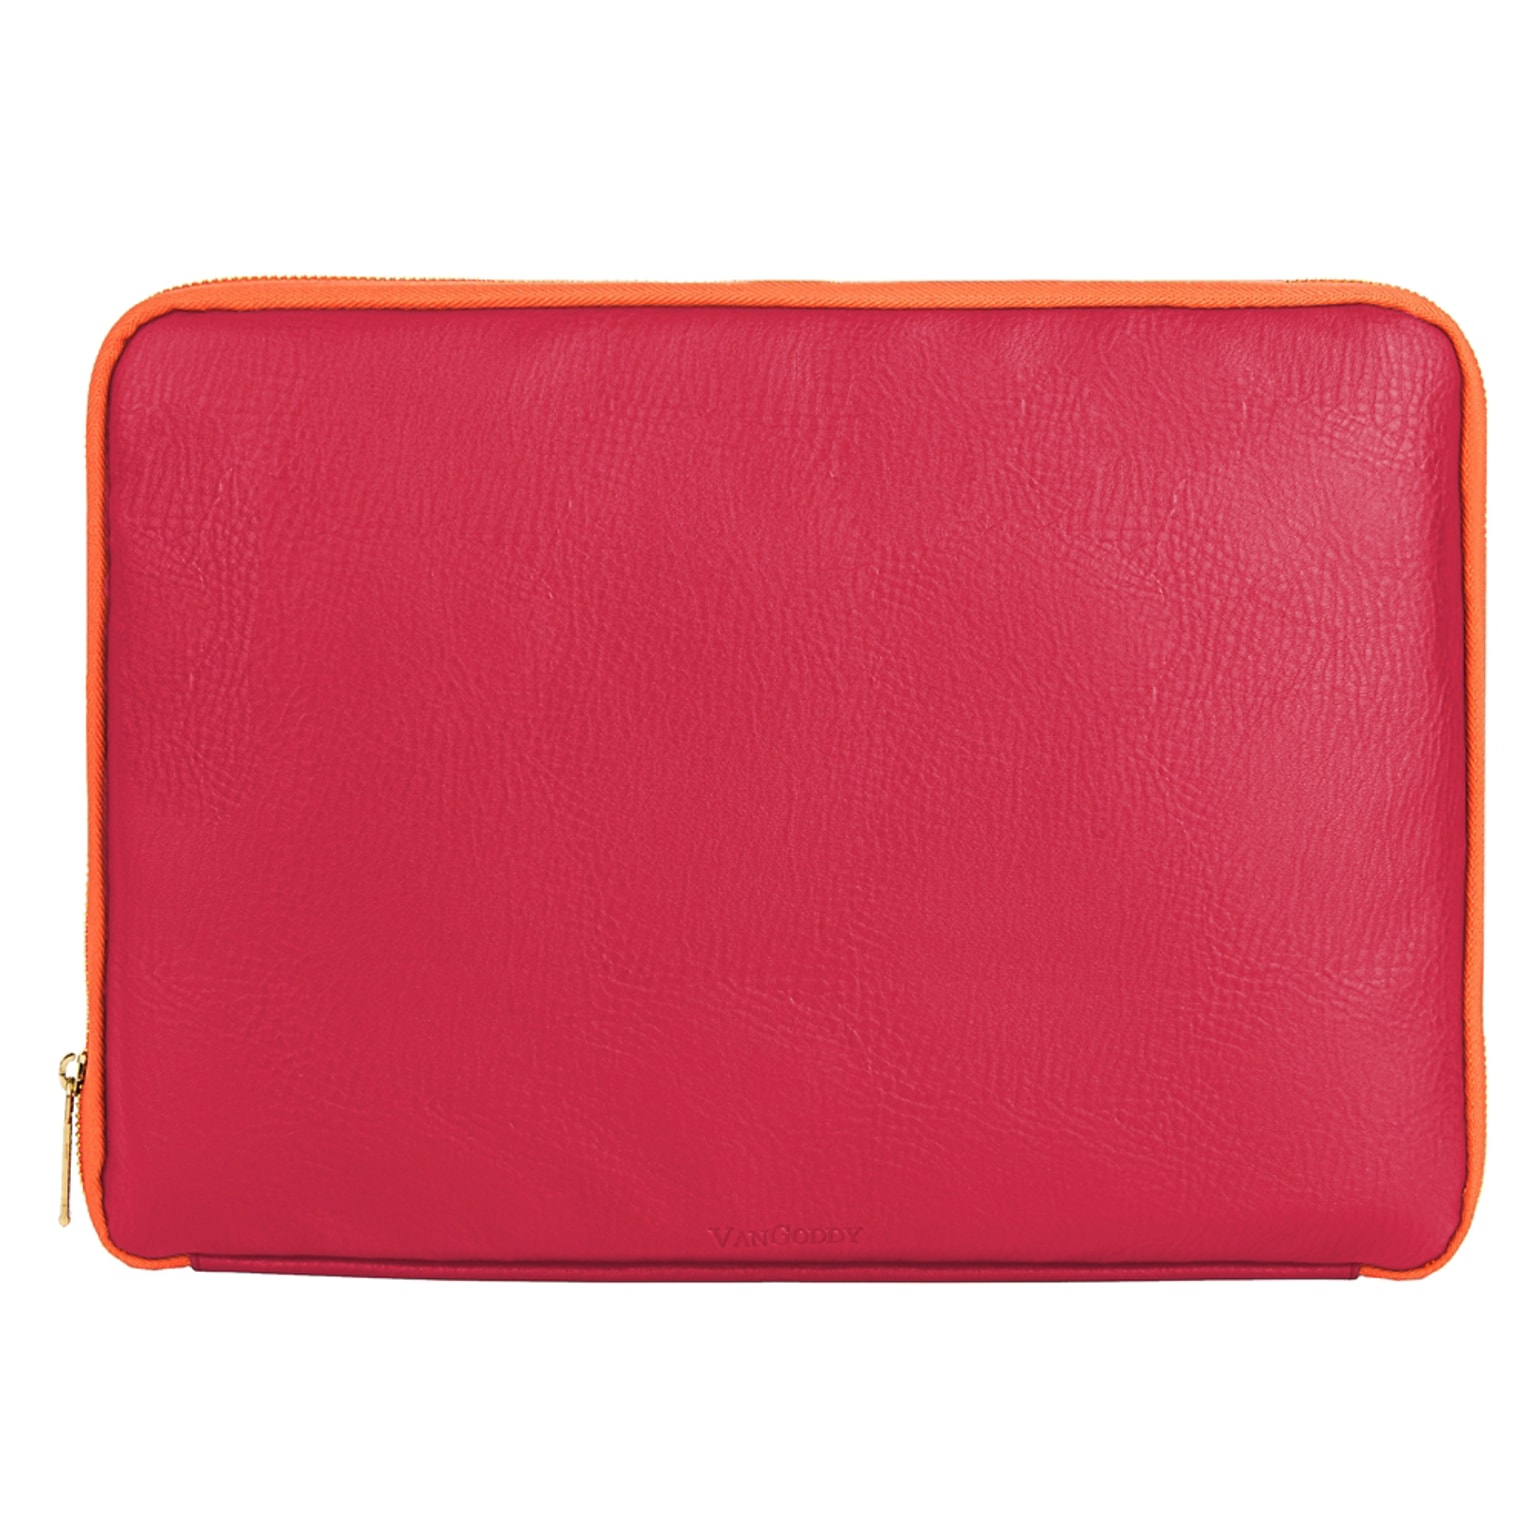 Vangoddy Irista Sleek Laptop Protector Sleeve 13 (Magenta/Orange)